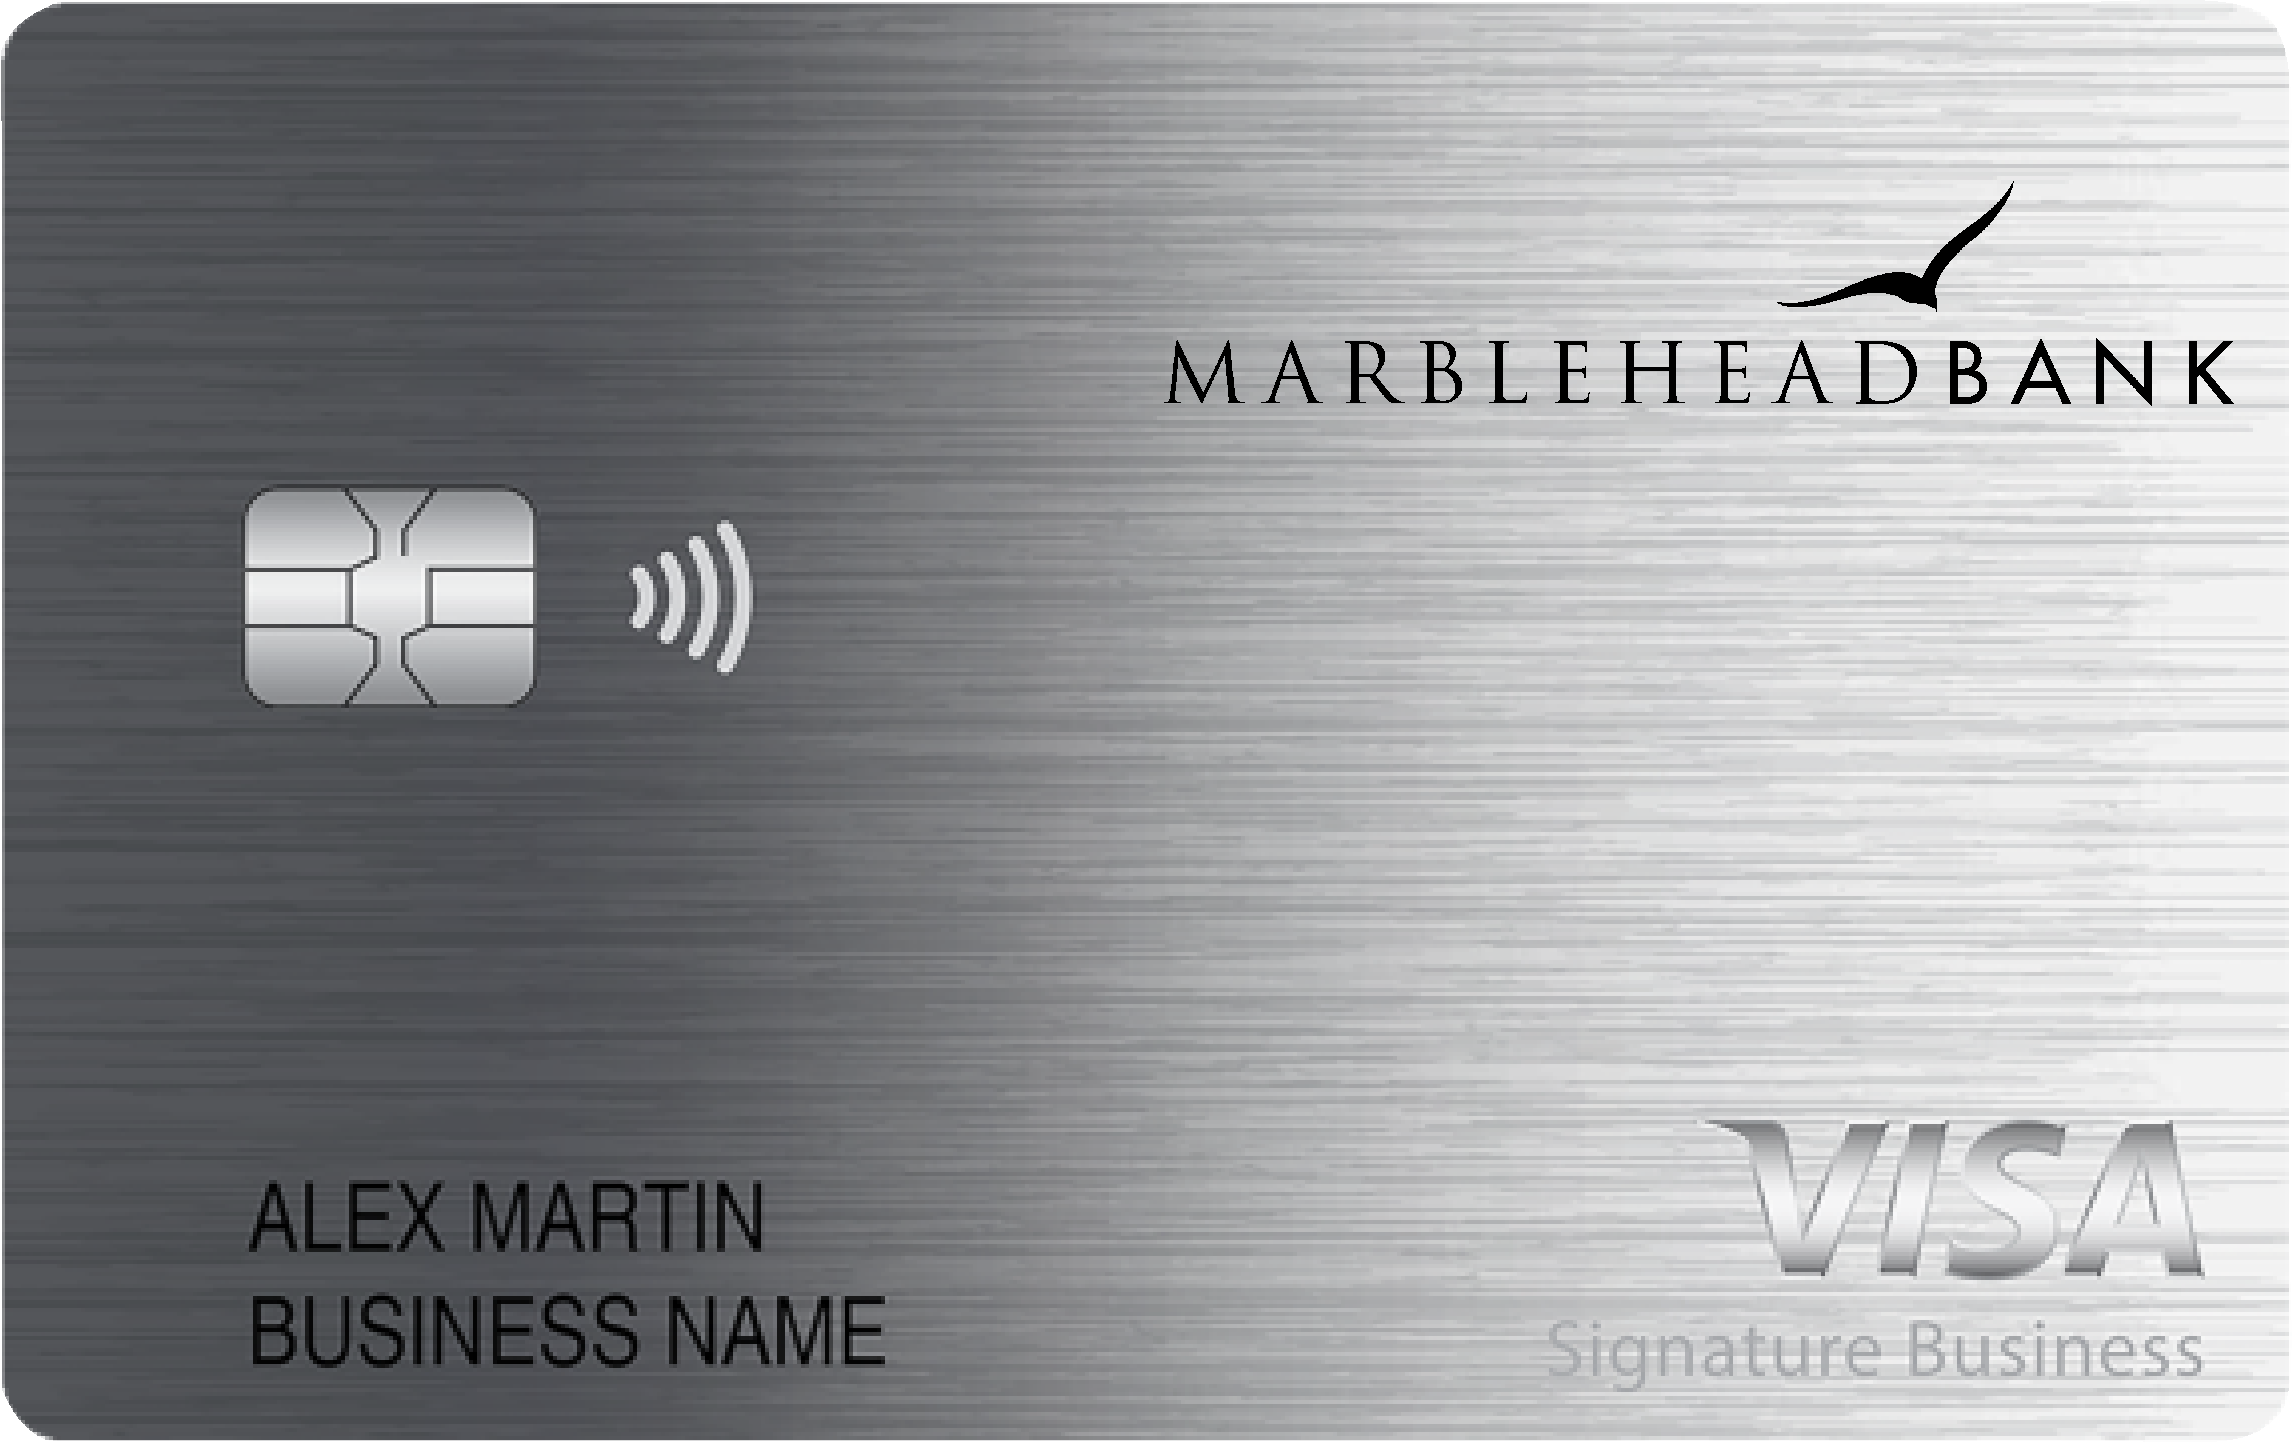 Marblehead Bank Smart Business Rewards Card